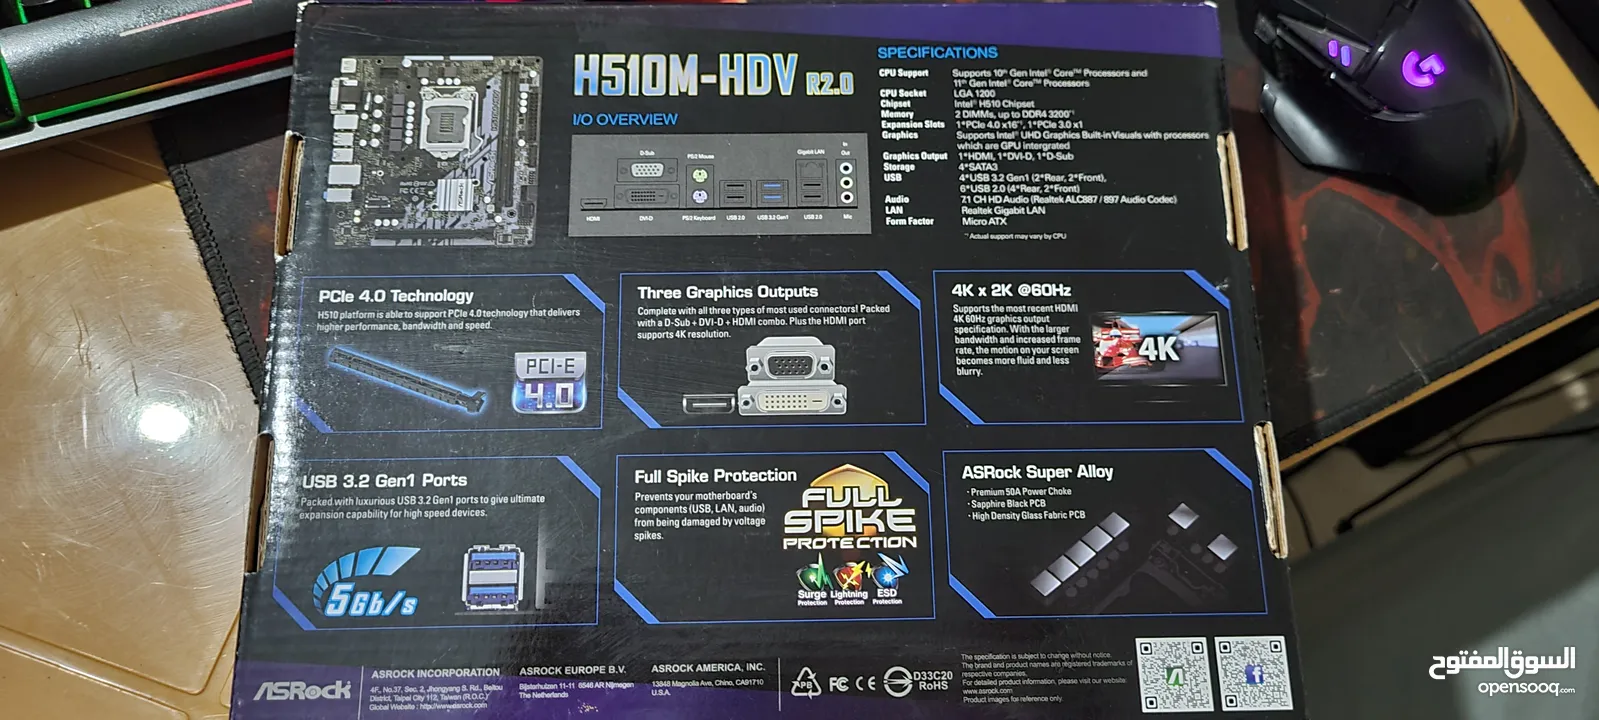 motherboard h510m-hdv r2.0 لوحه ام